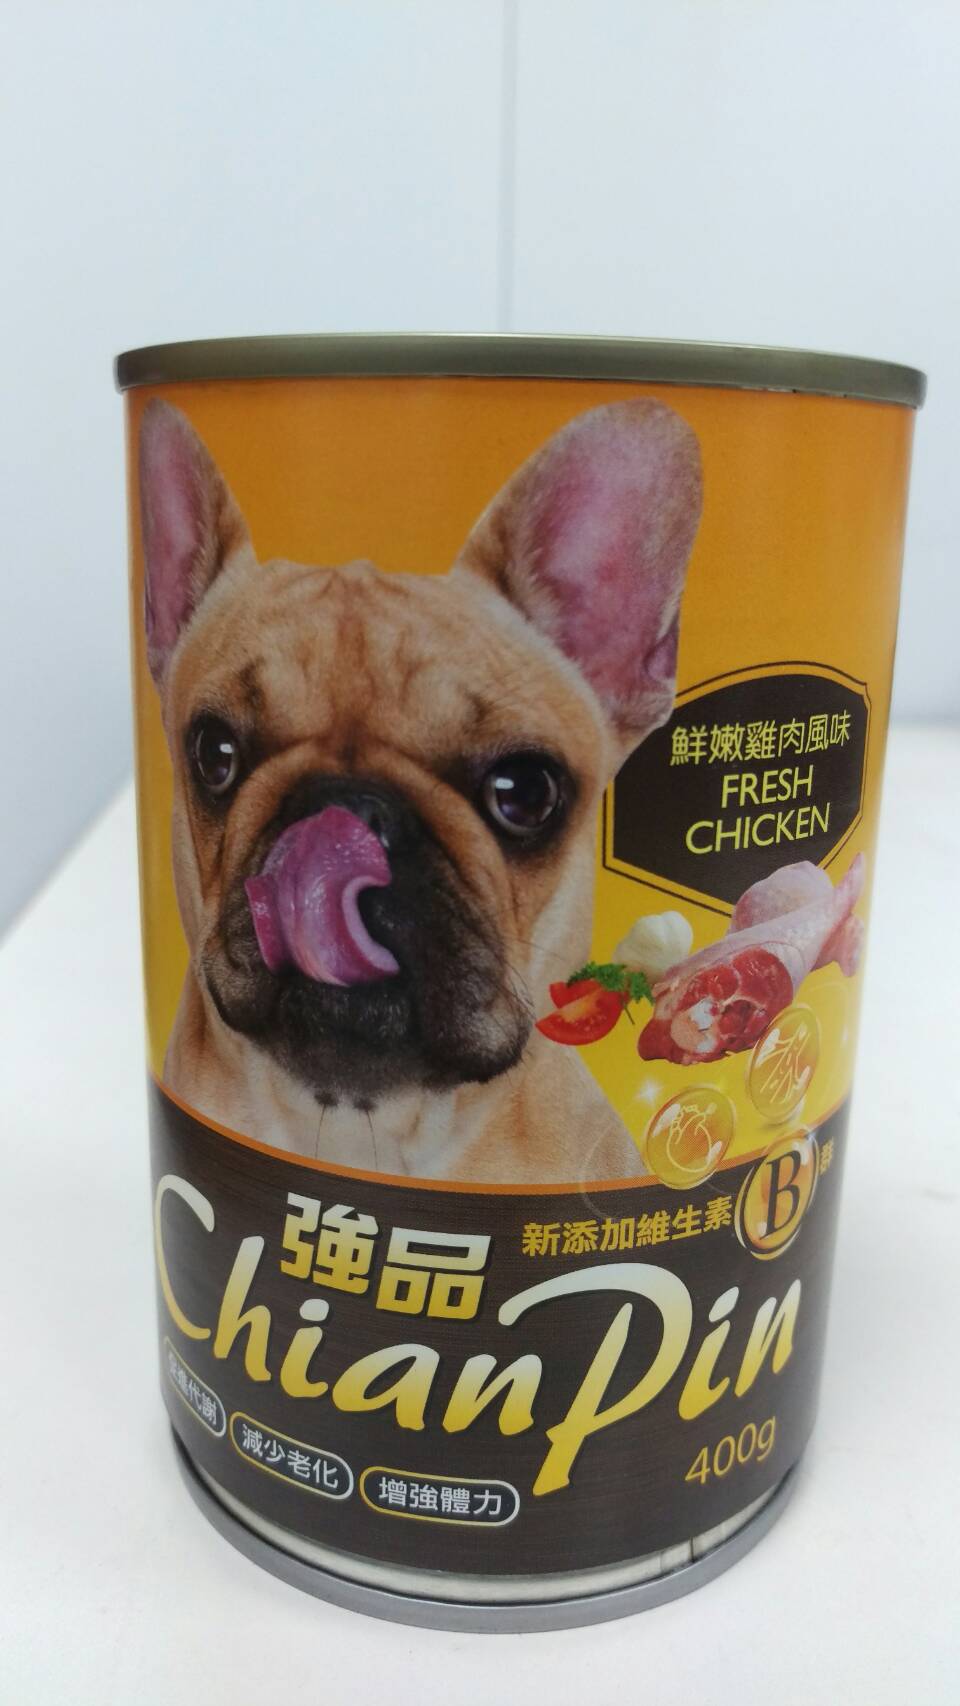 強品犬罐-鮮嫩雞肉風味
Chian Pin dog can- fresh chicken